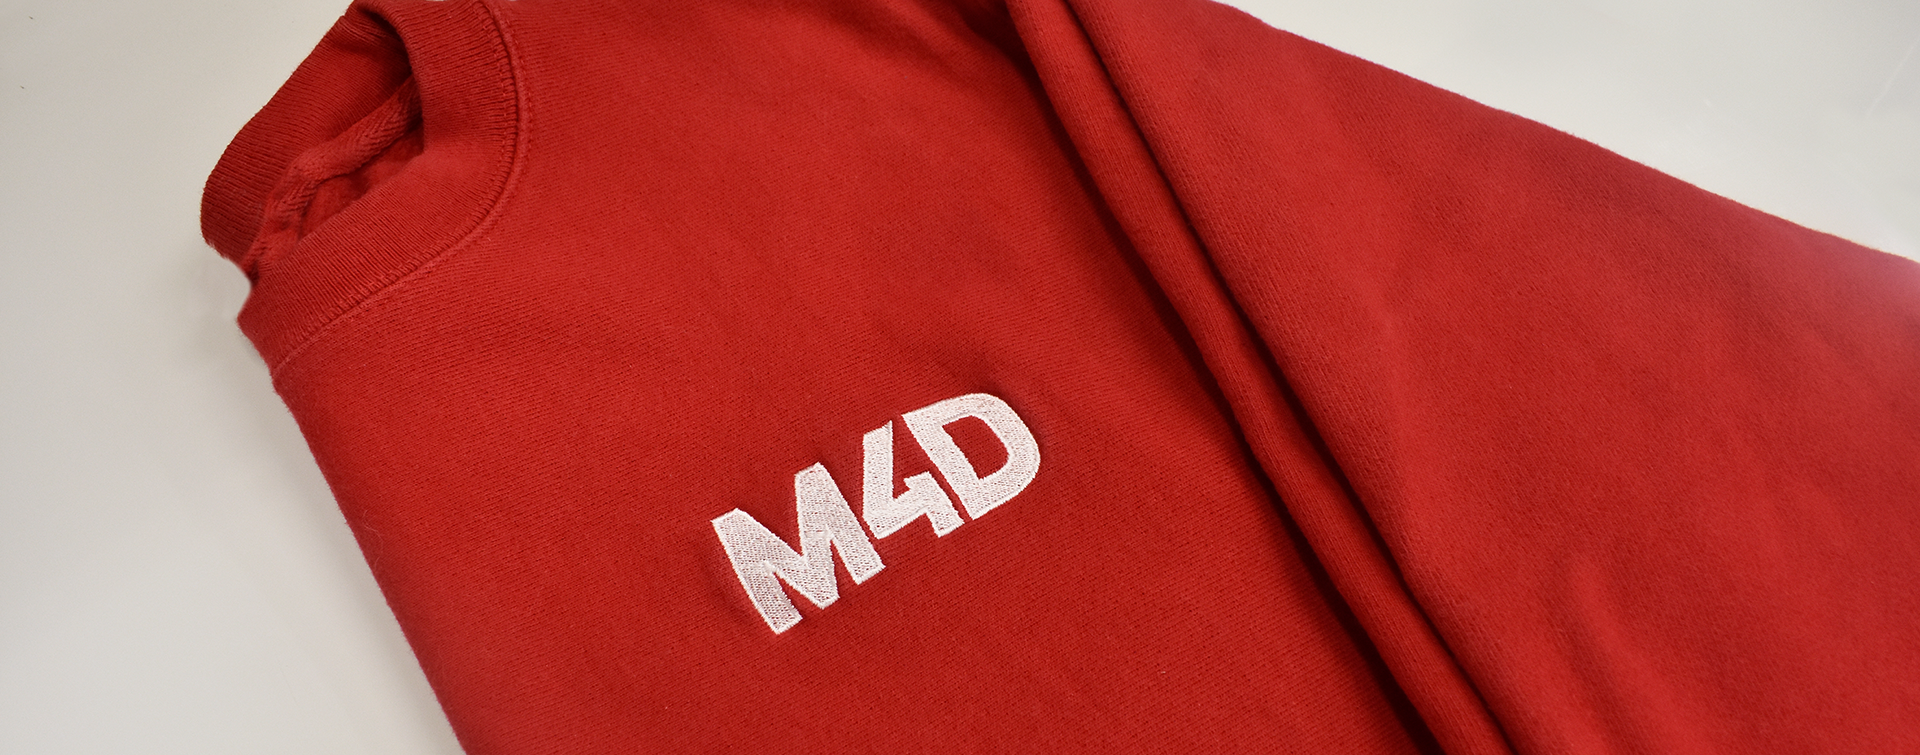 m4d-promo-red